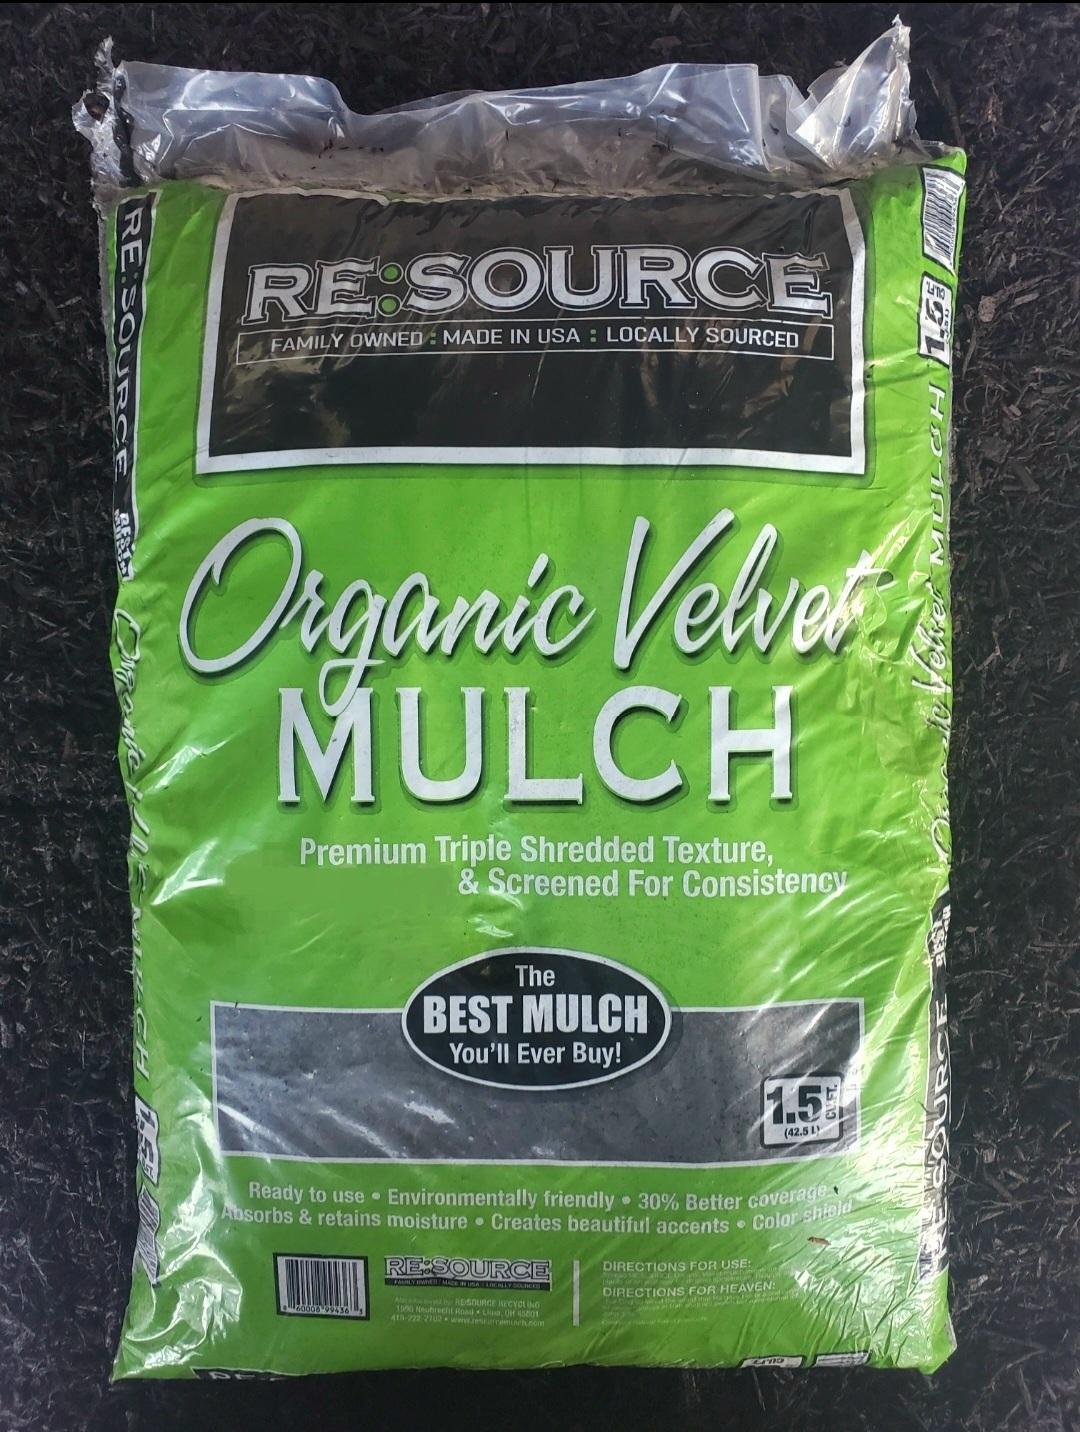 Organic Velvet Hardwood Mulch-1.5 cu ft bag